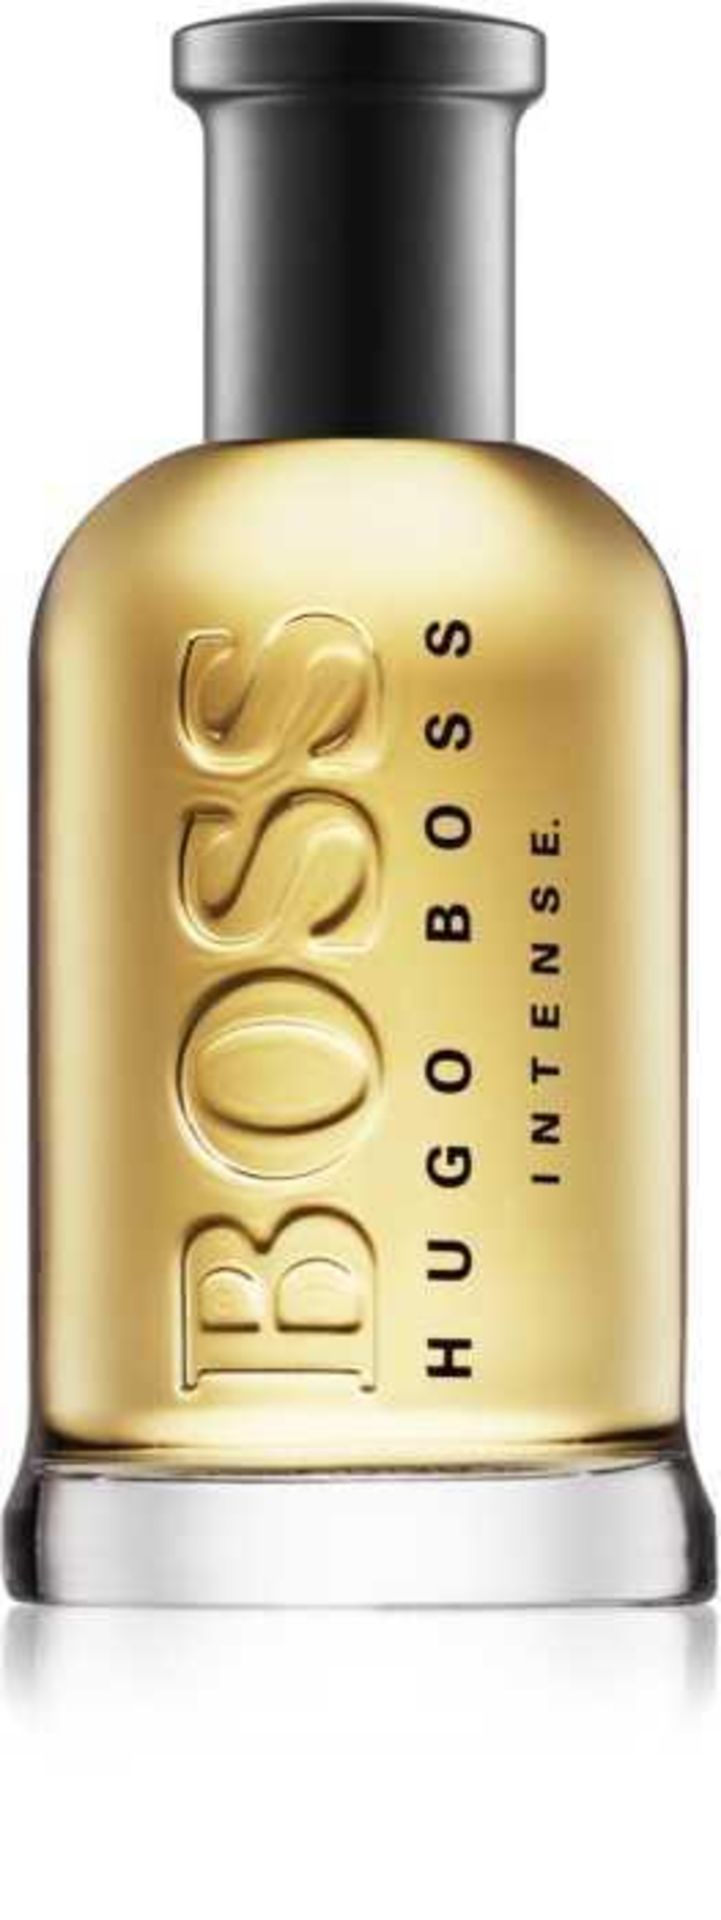 RRP £70 Unboxed Ex-Display Tester Bottle Of Hugo Boss Intense 100Ml